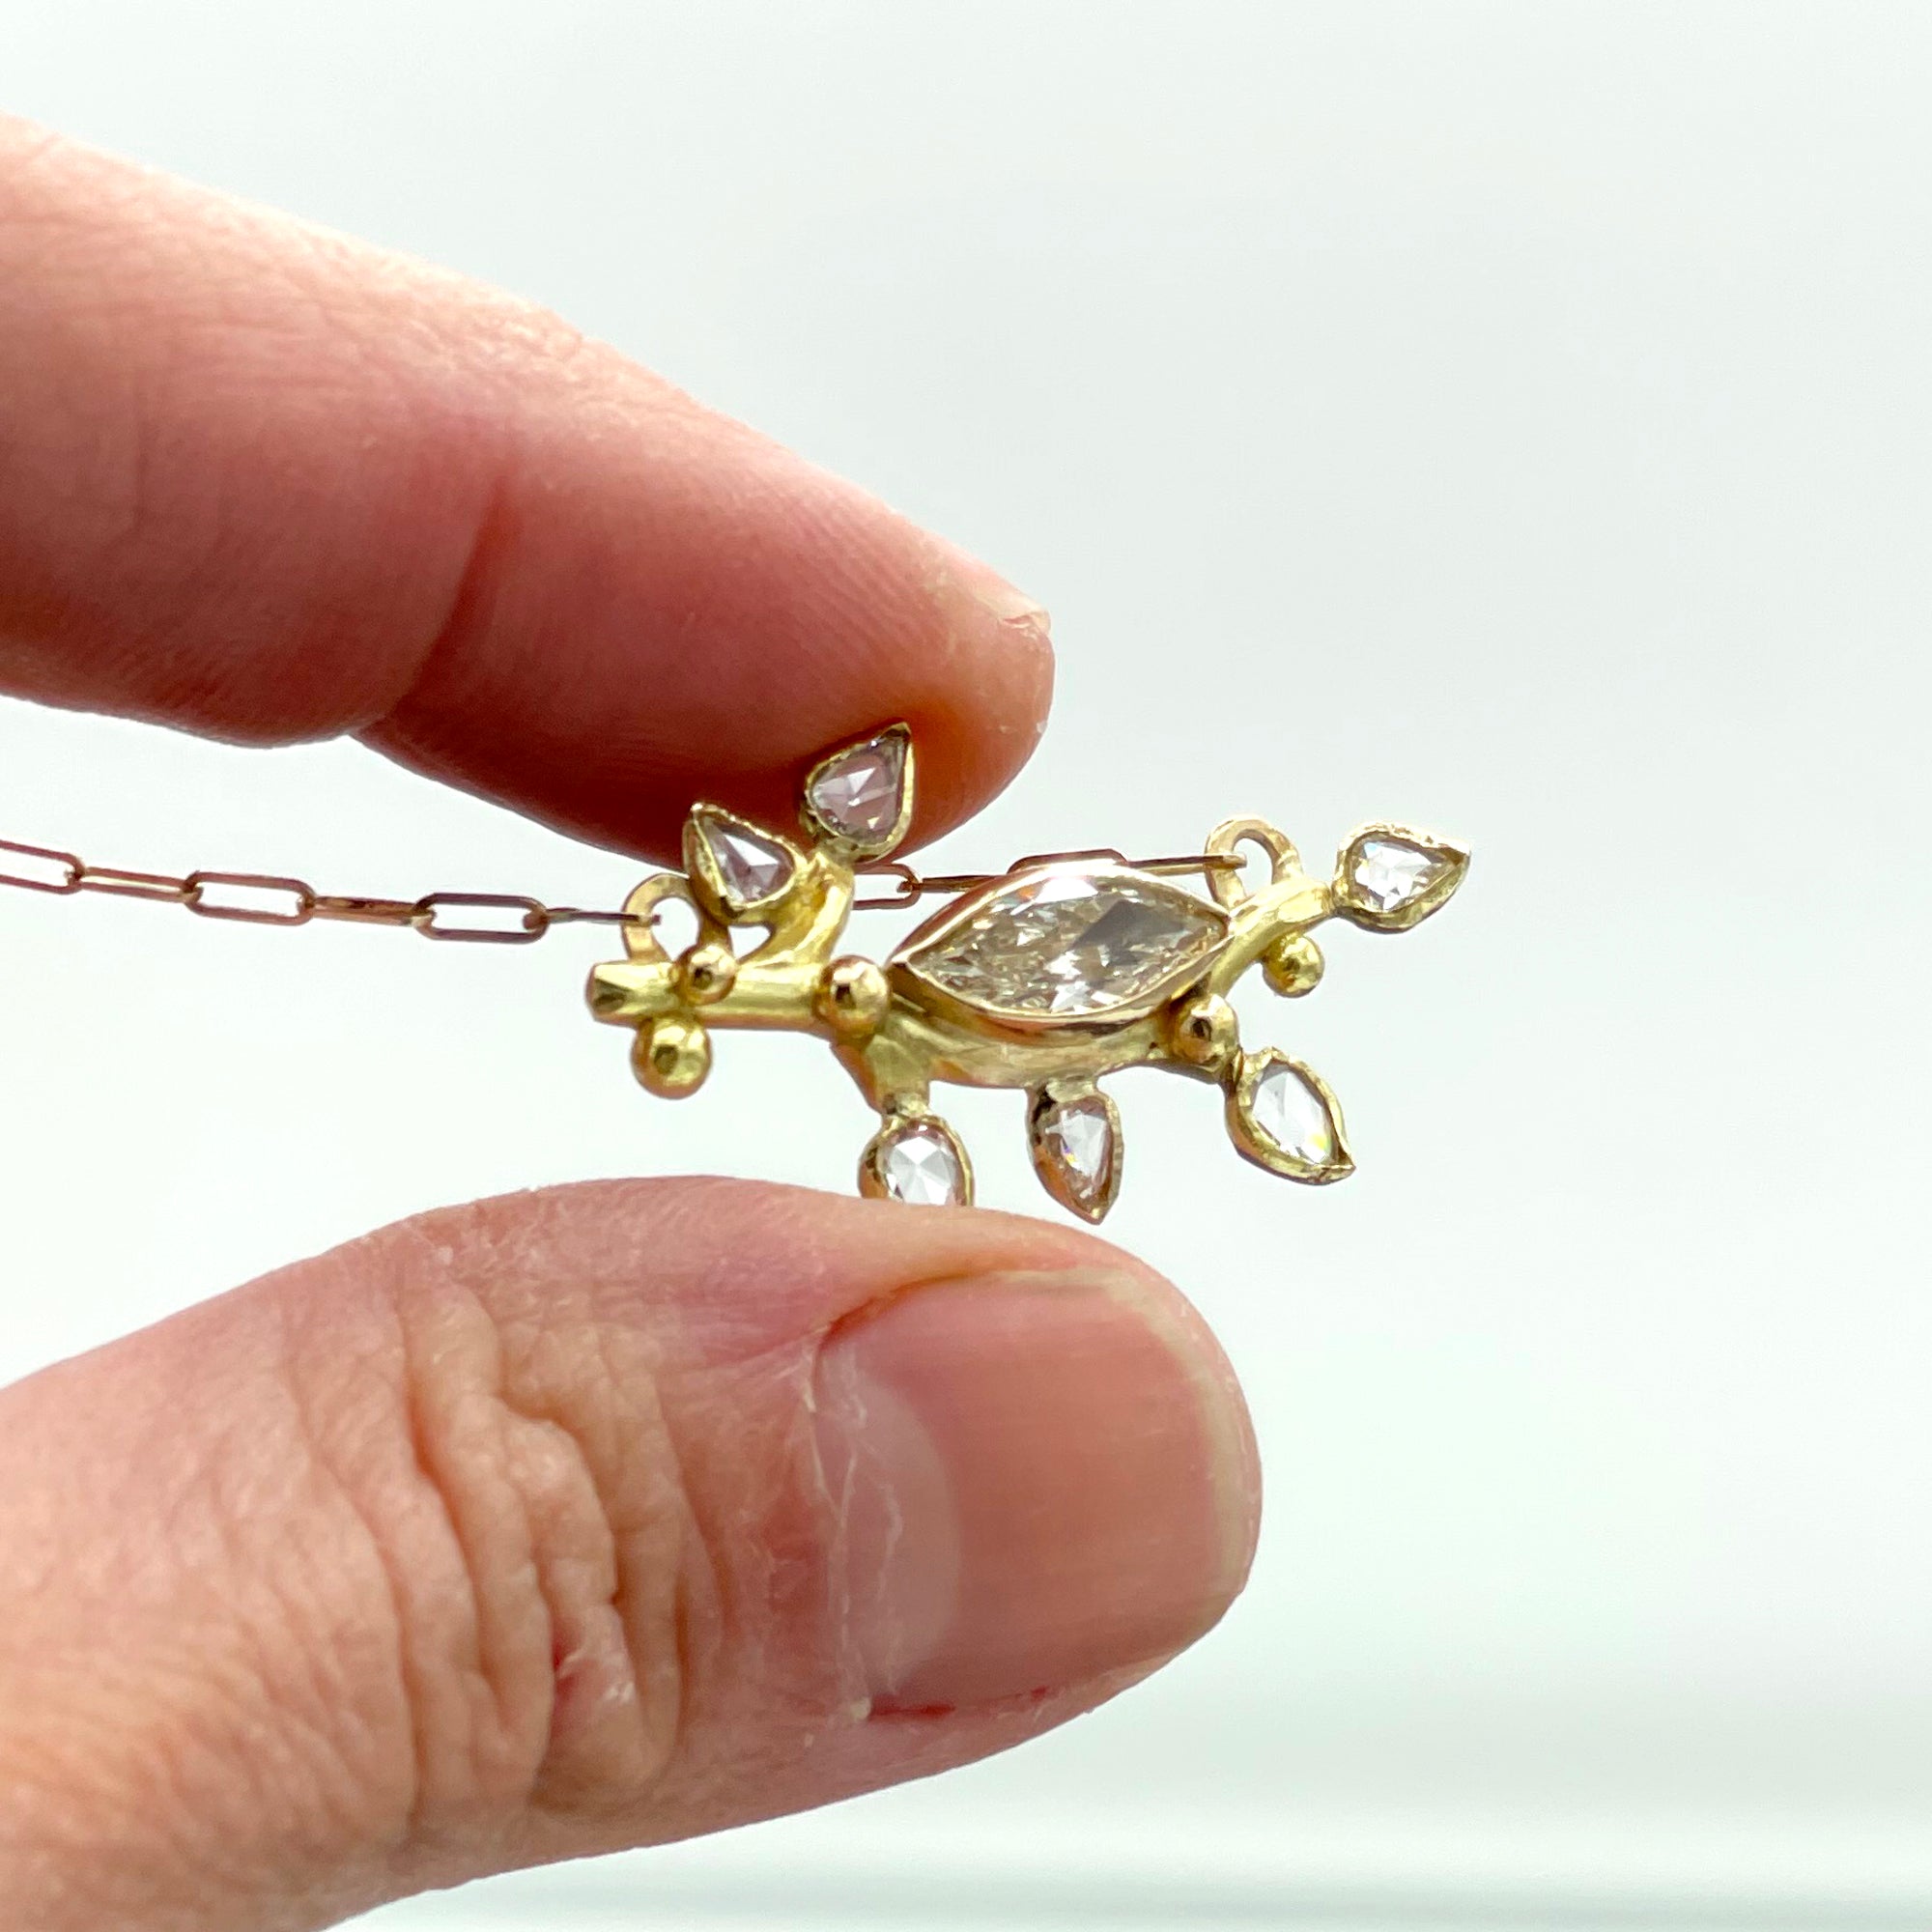 14K Diamond Necklace, Diamond Leaf Necklace, Solid Gold, One of a Kind